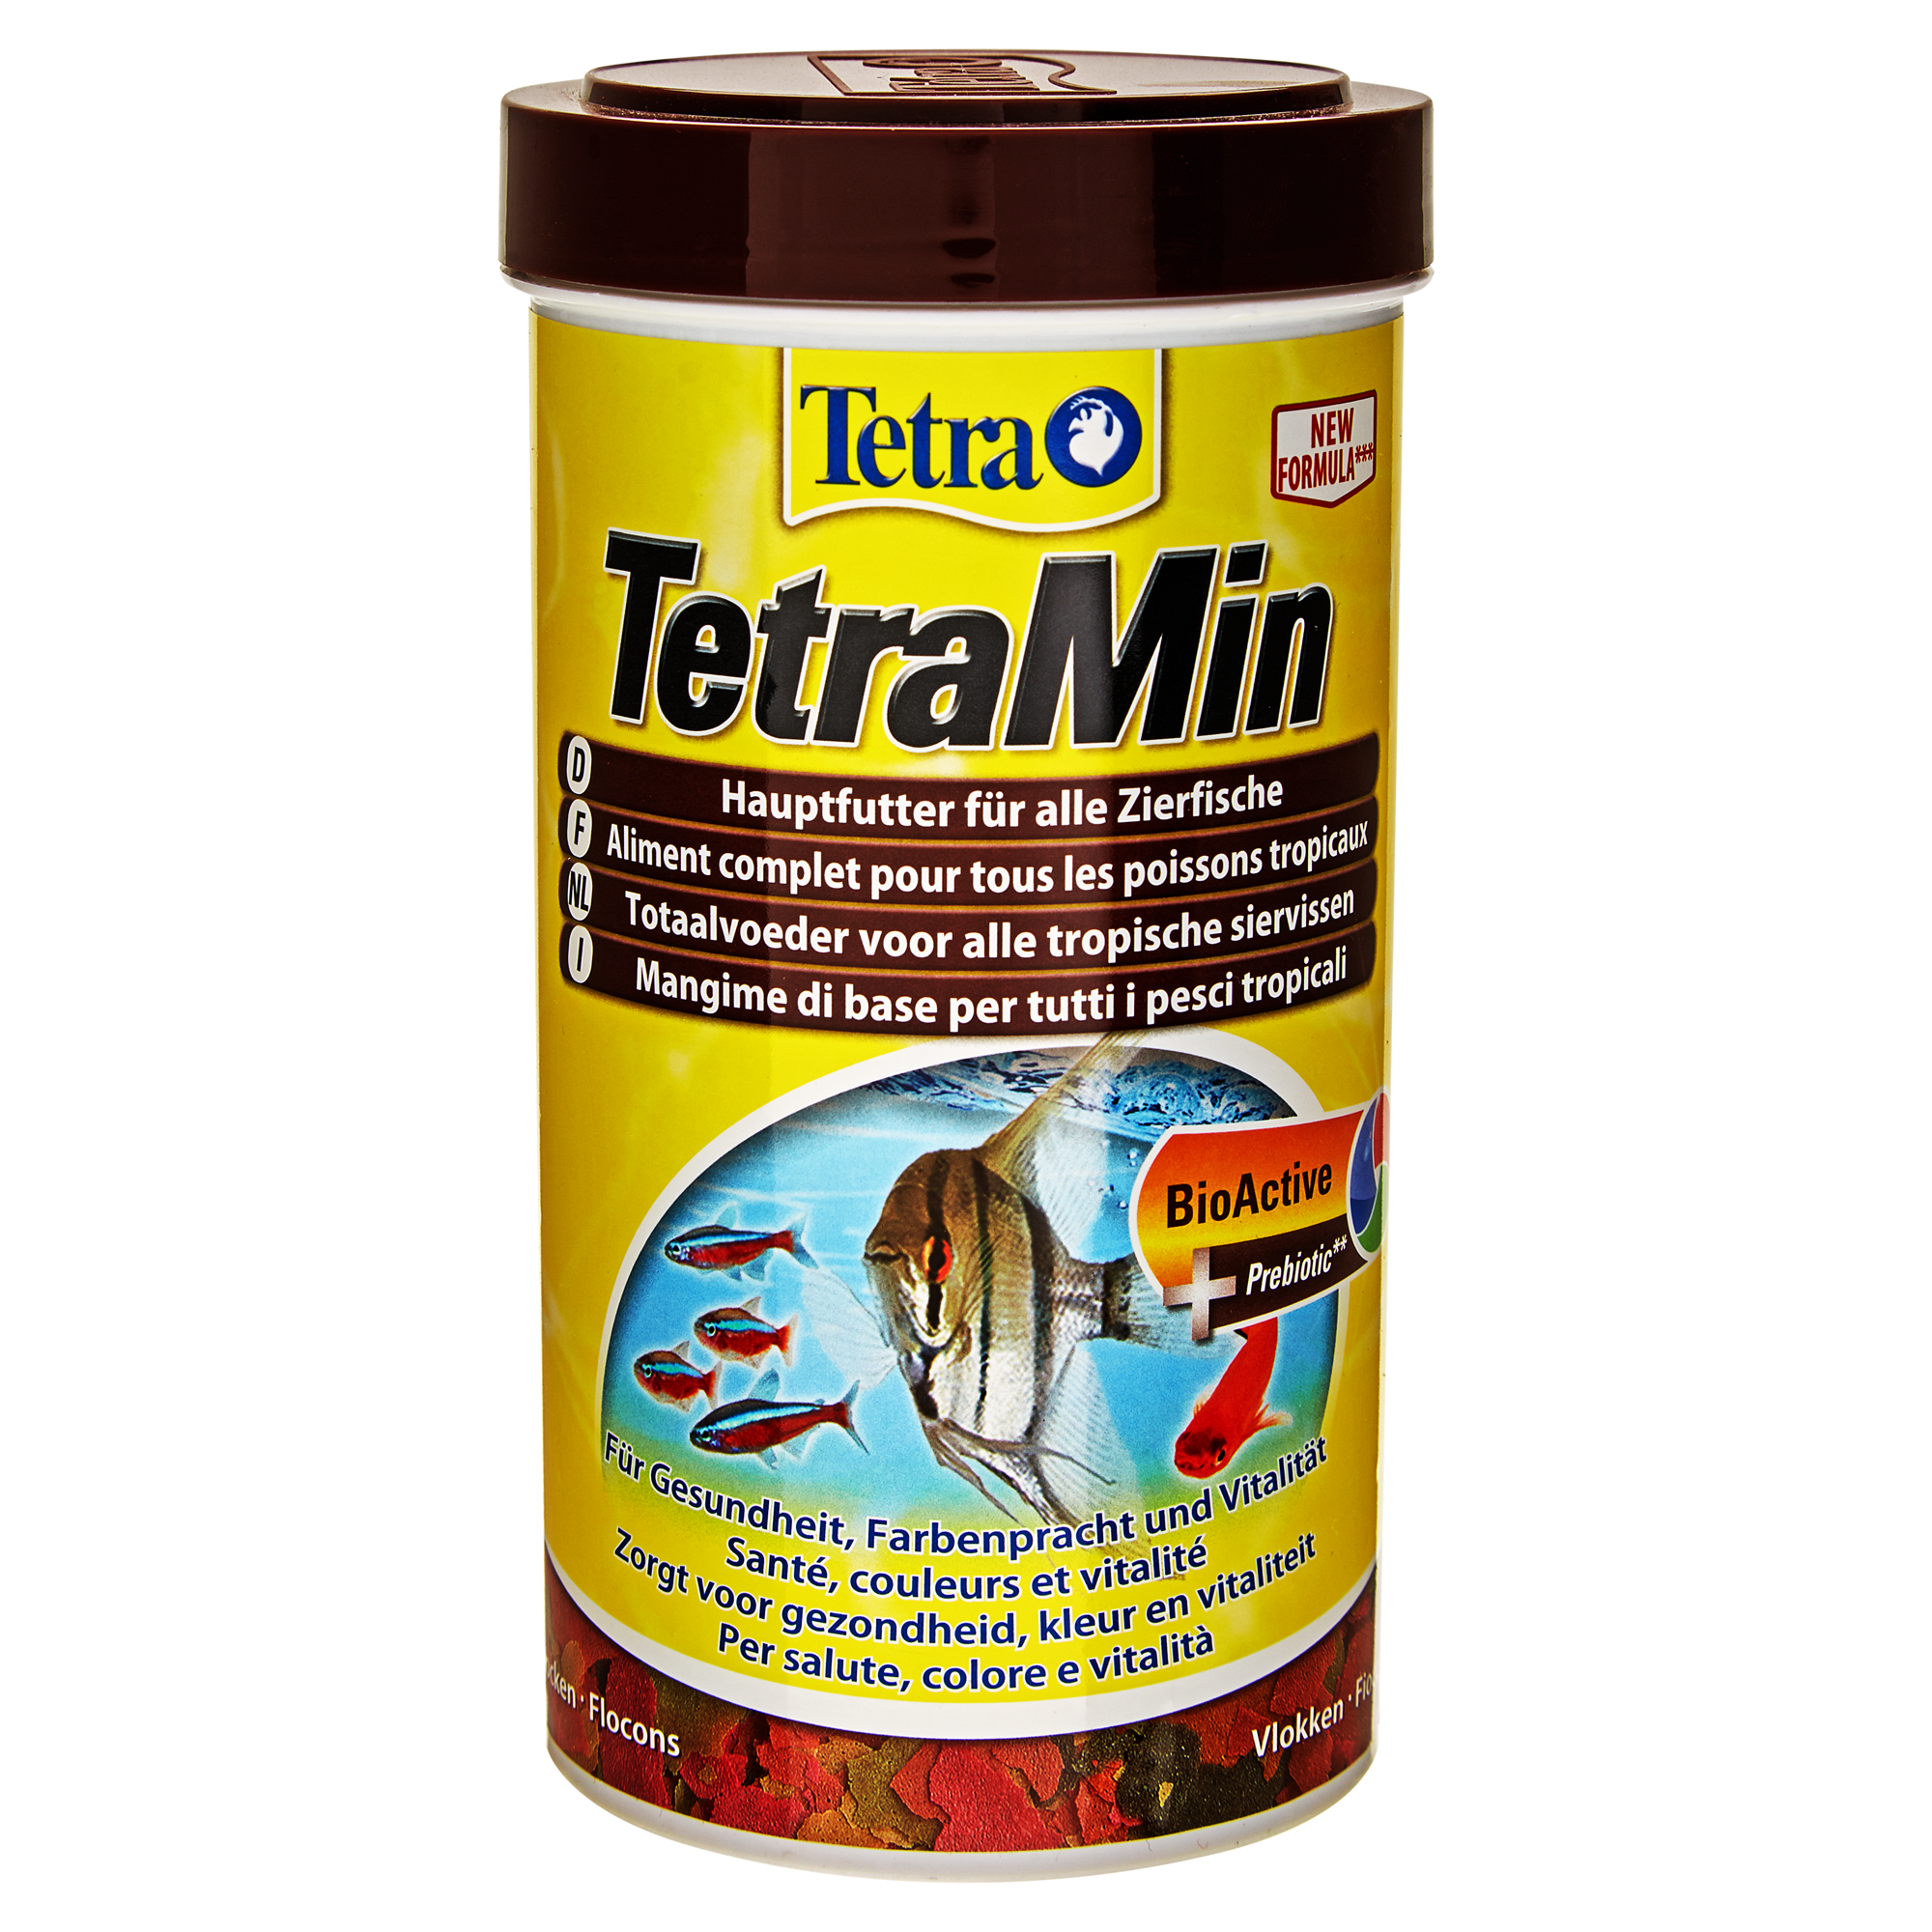 Fischfutter TetraMin 100 g + product picture